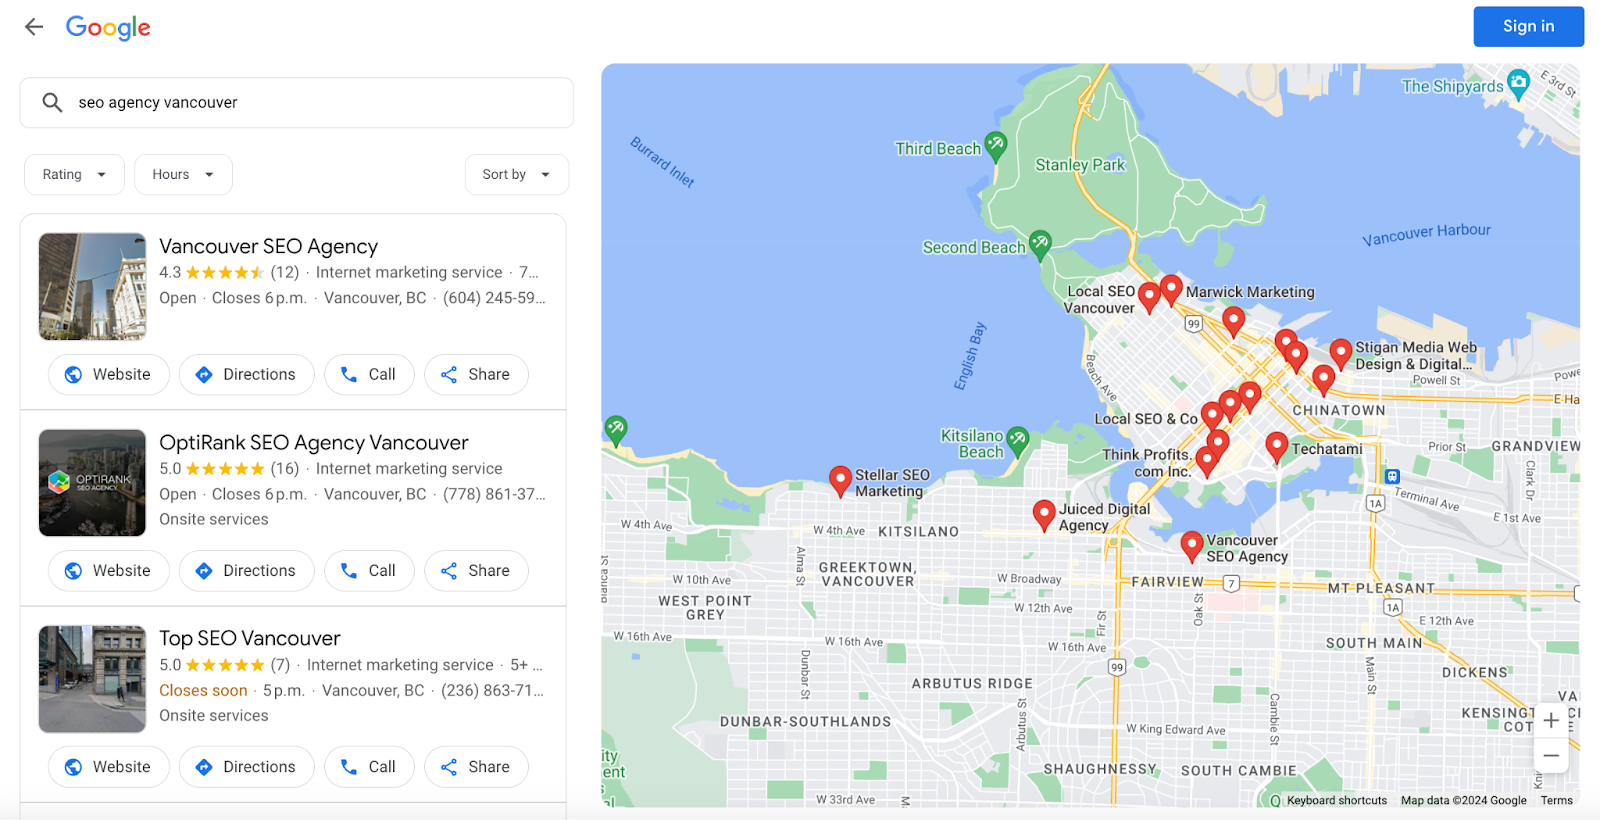 SEO Agency Vancouver on Google Maps